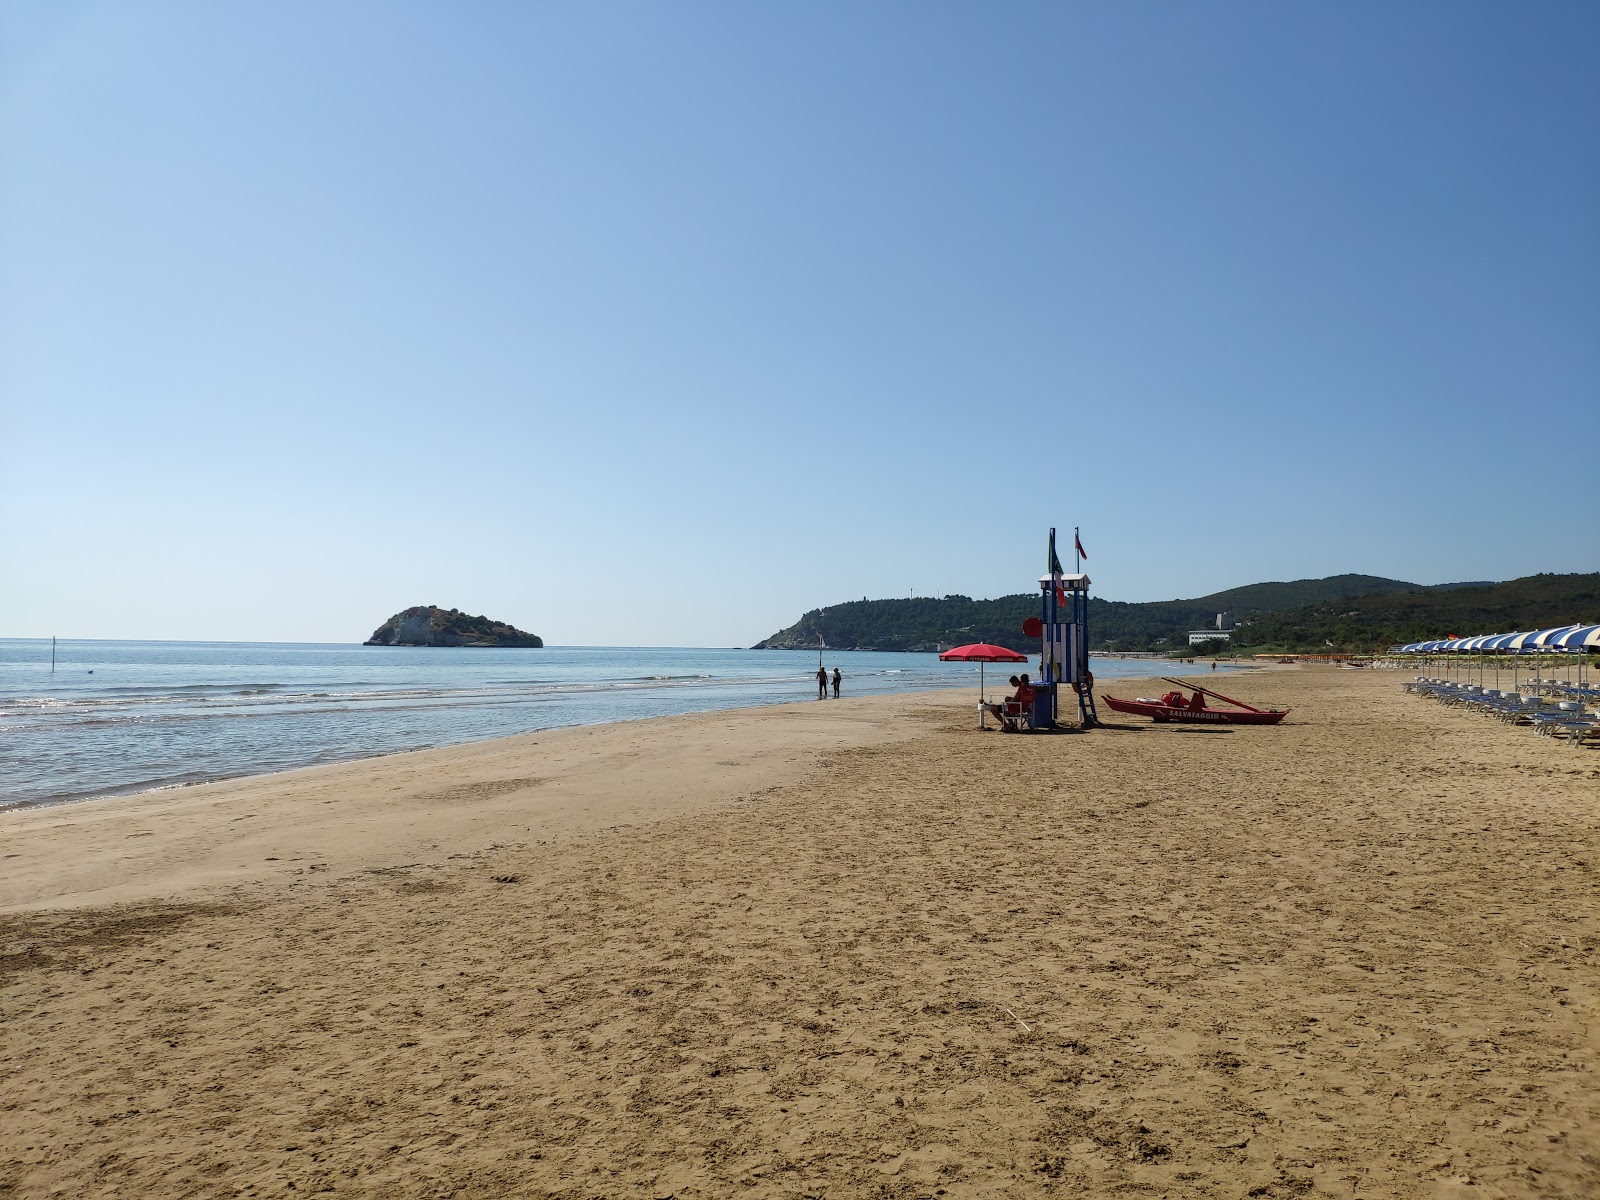 Foto de Spiaggia di Portonuovo - lugar popular entre los conocedores del relax